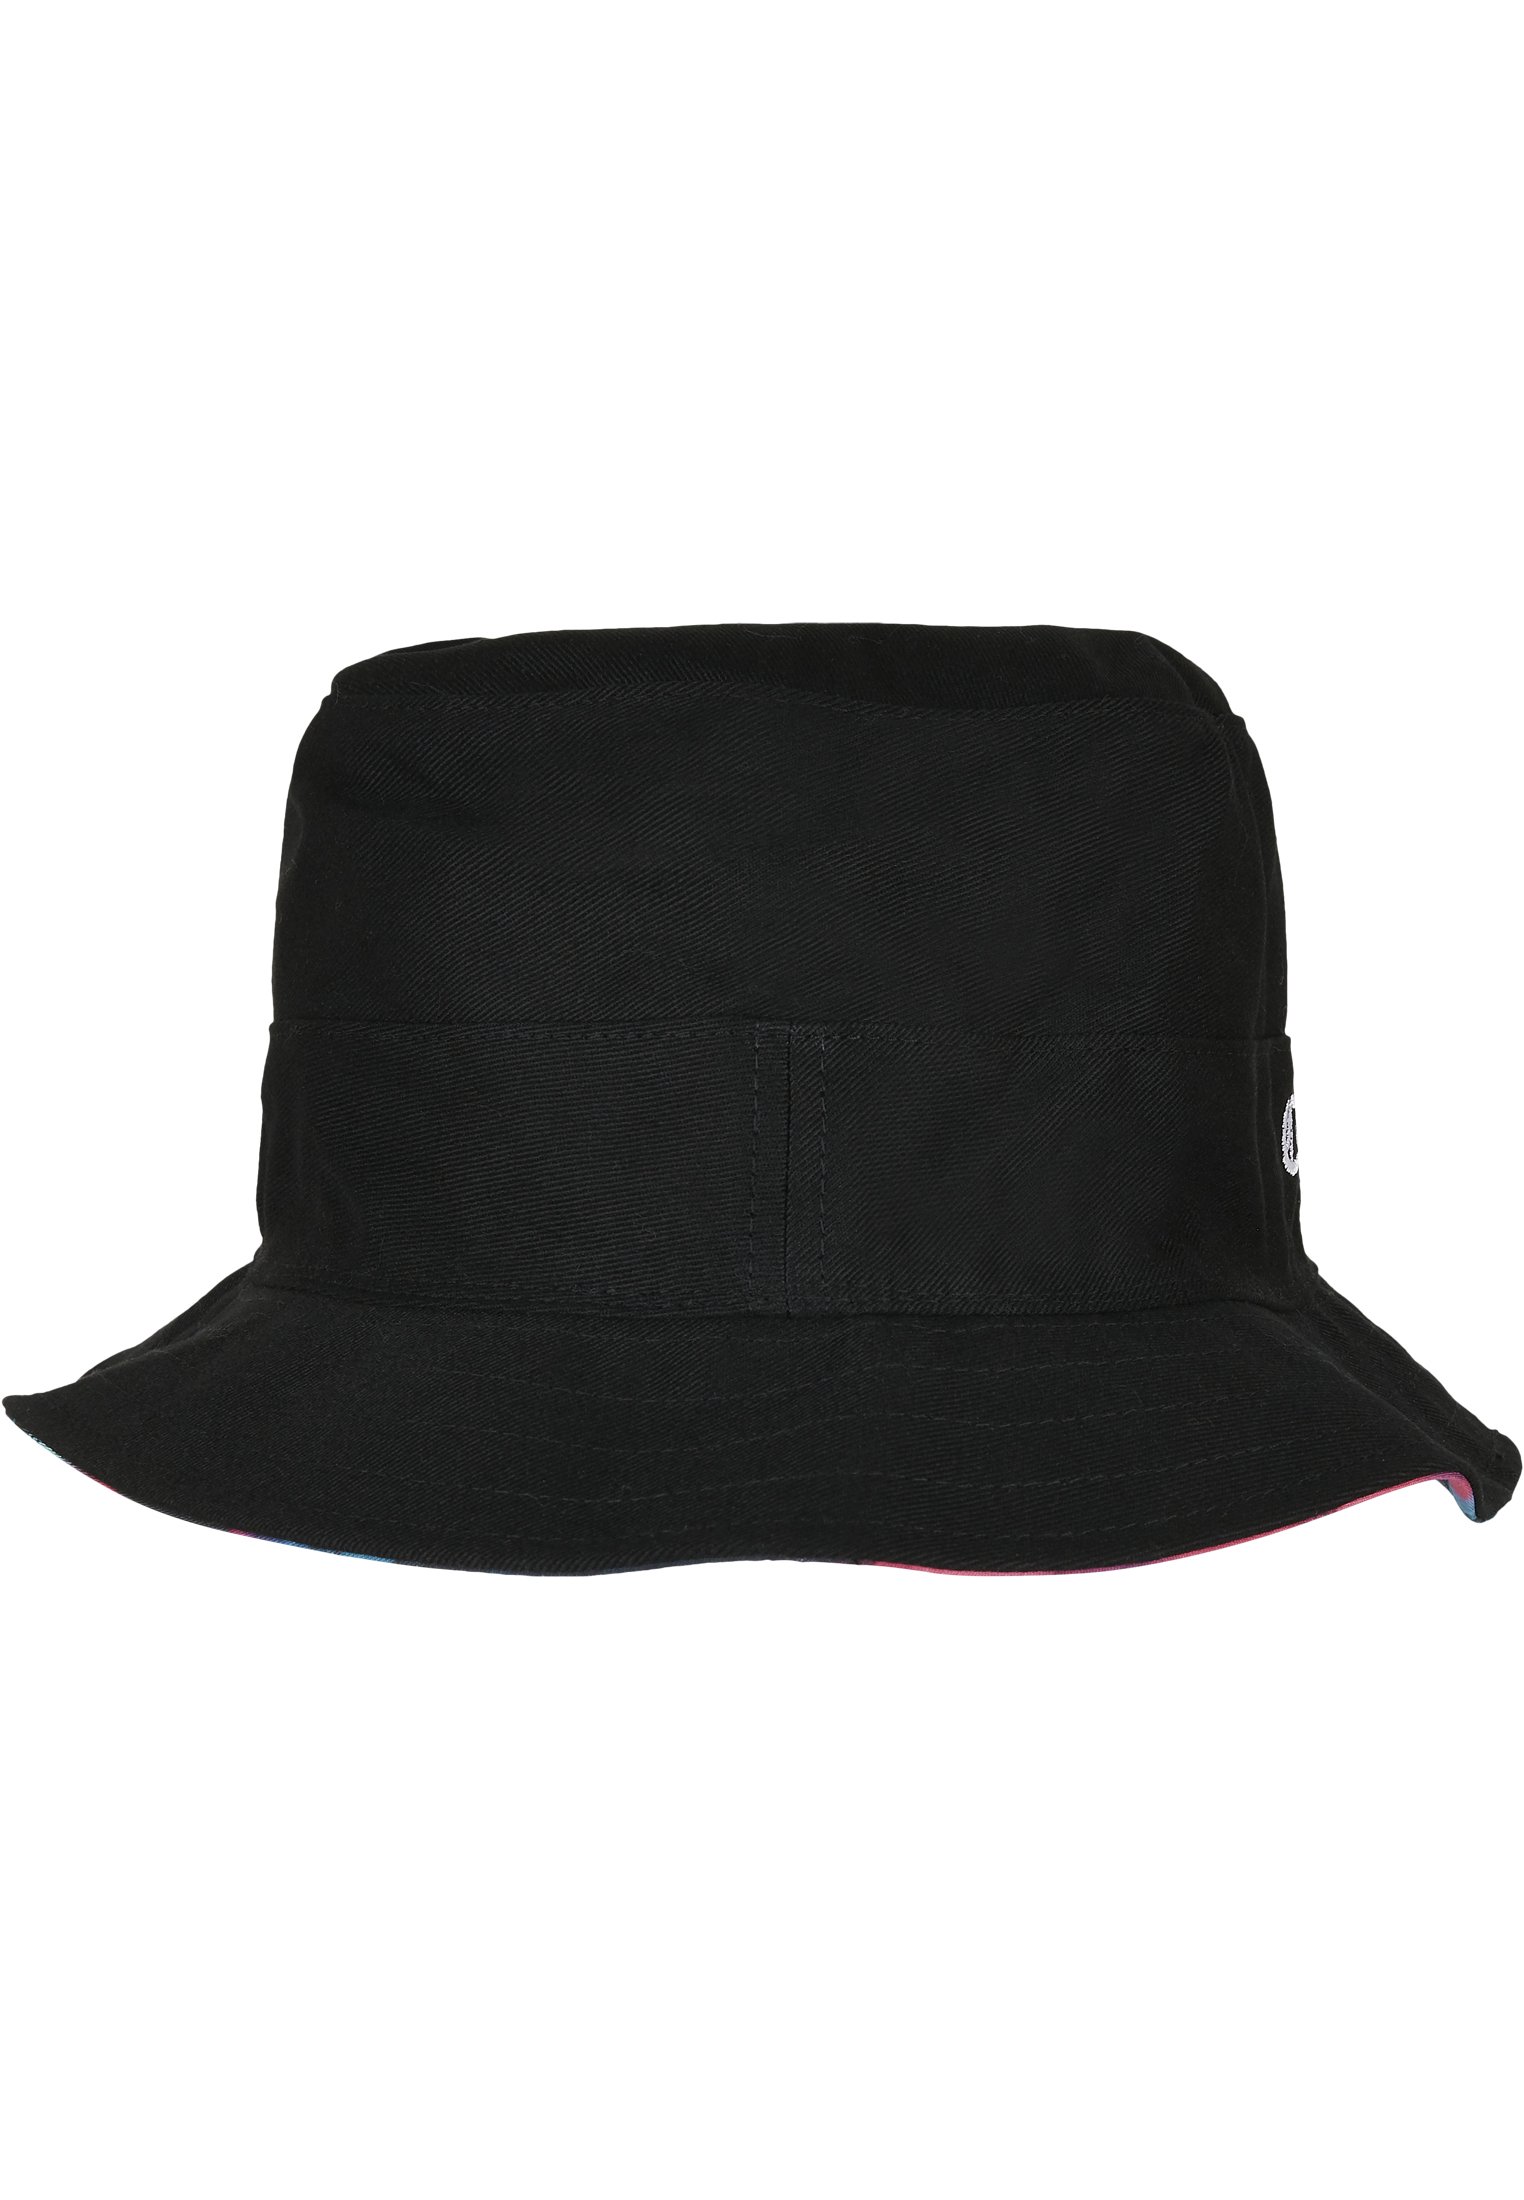 C&S WL Drop Top Trees Reversible Bucket Hat black/mc one size